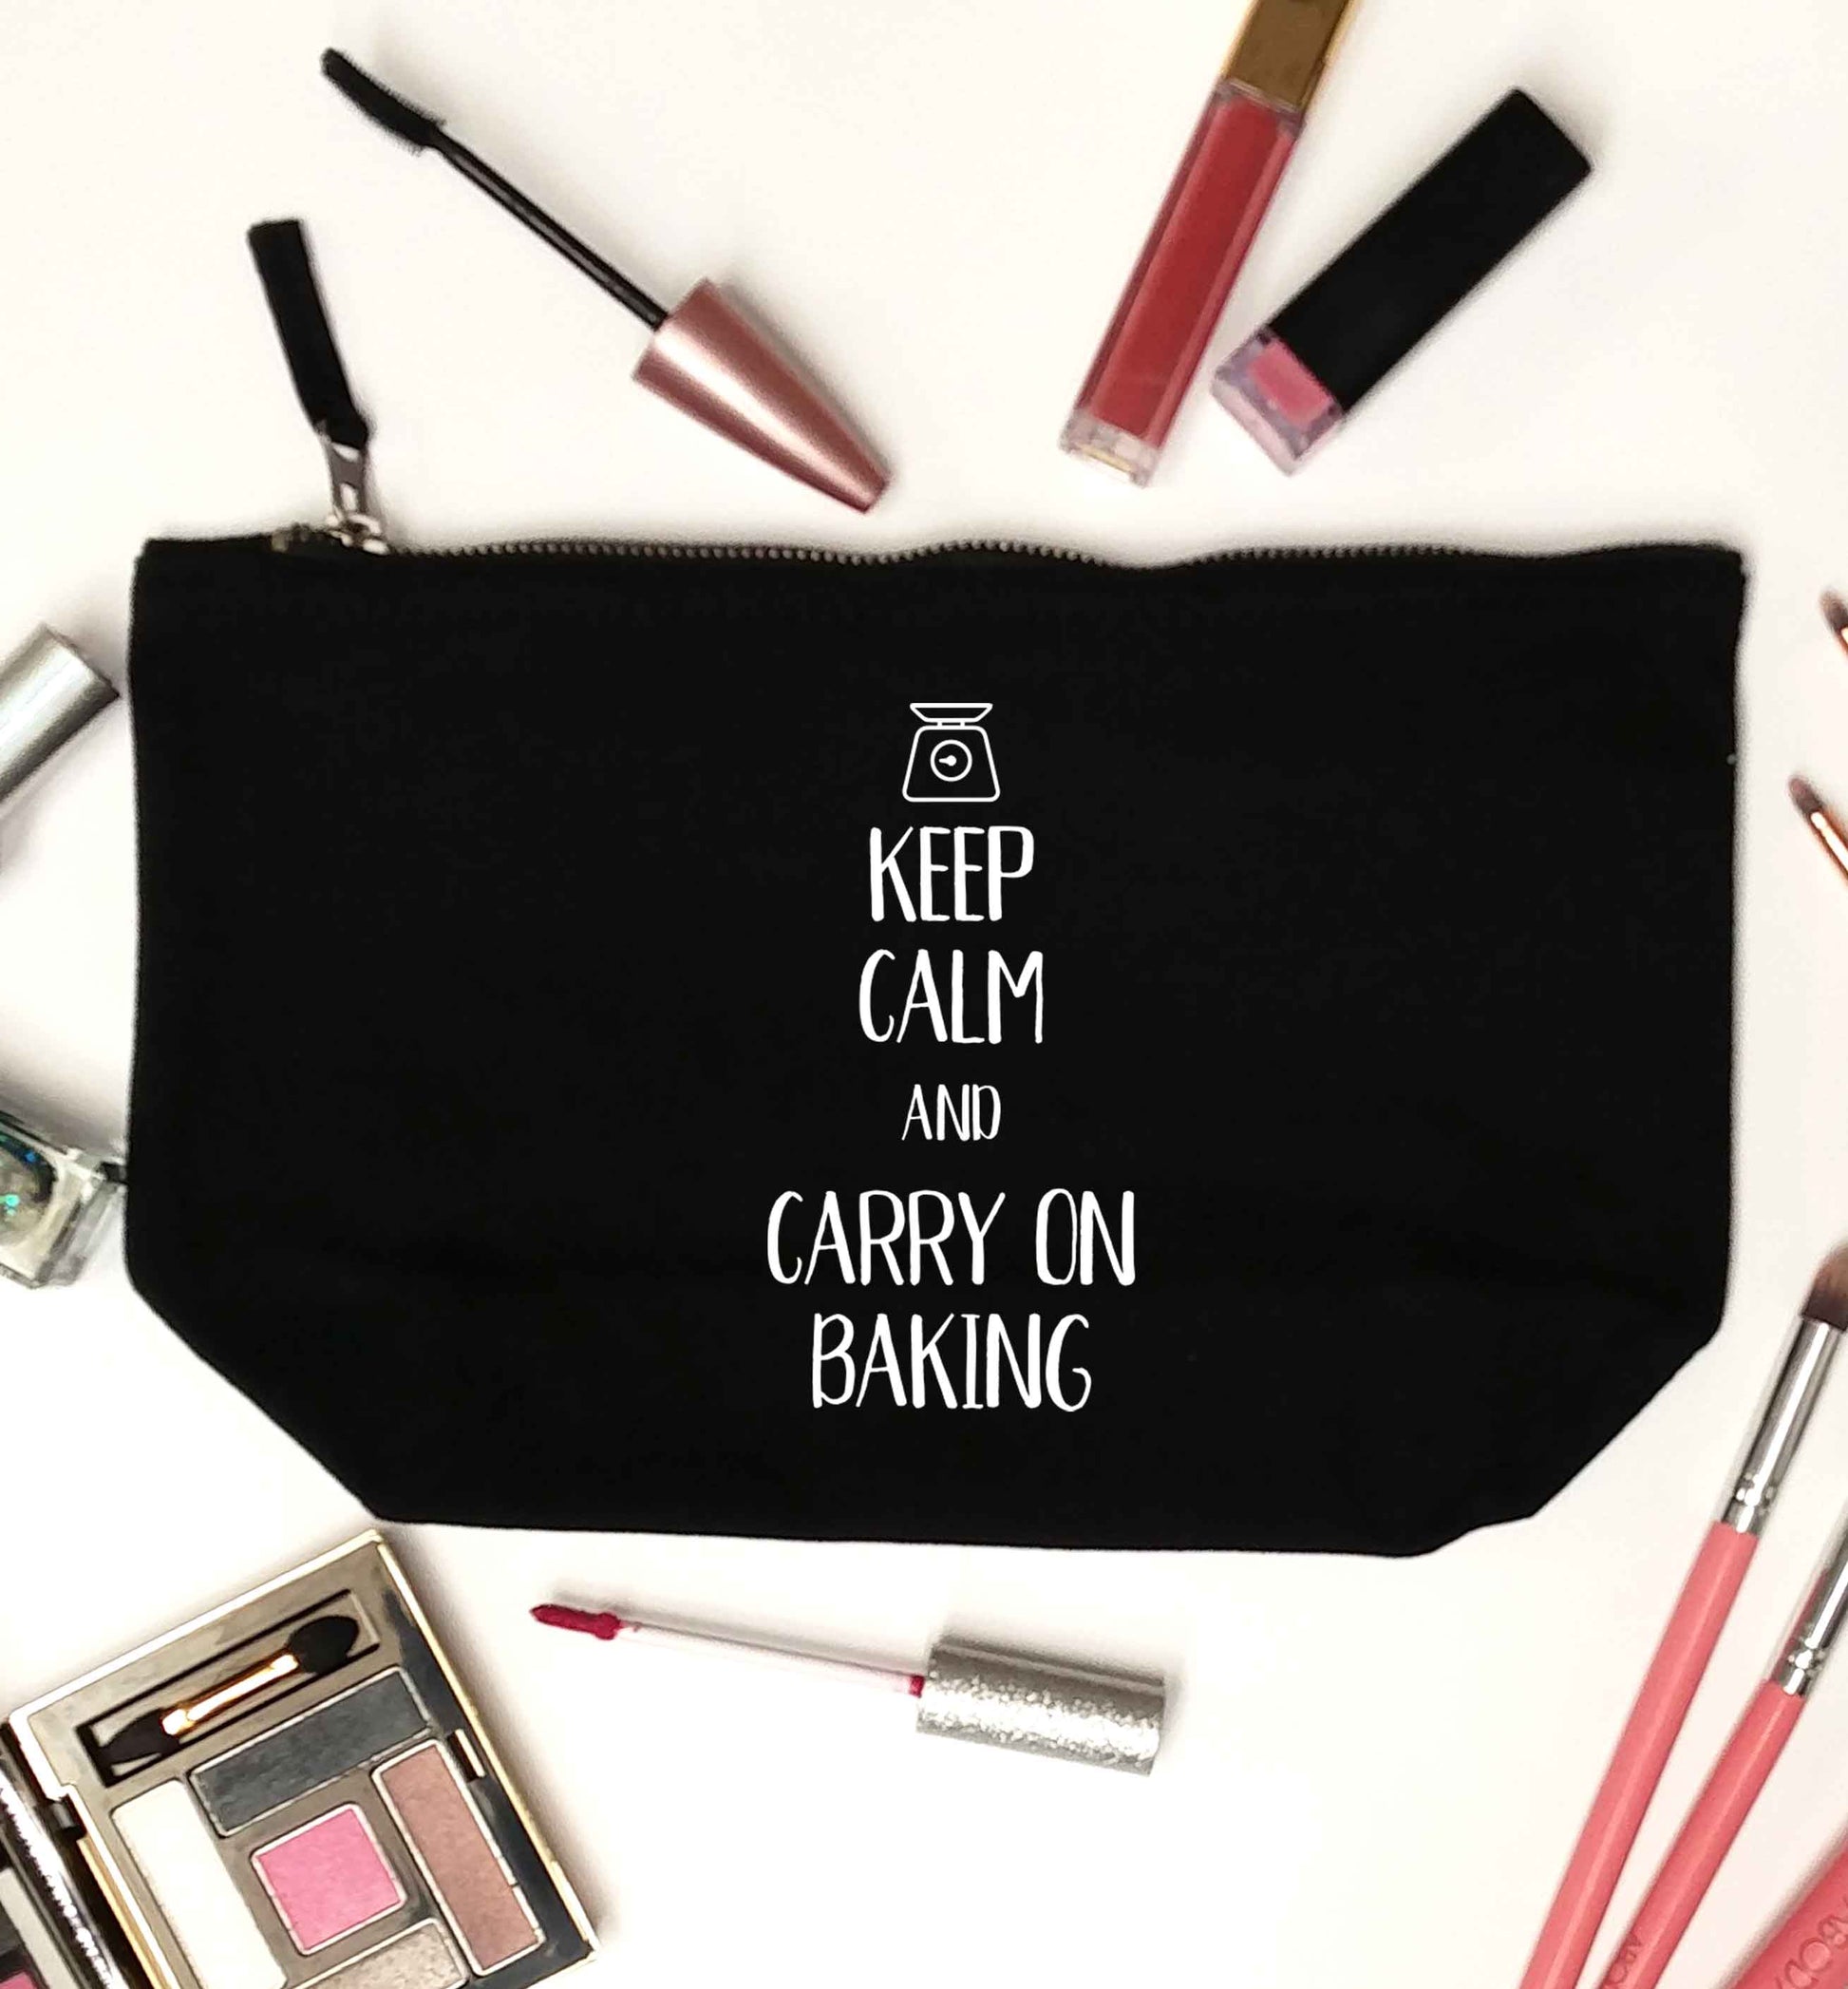 Keep calm and carry on baking black makeup bag